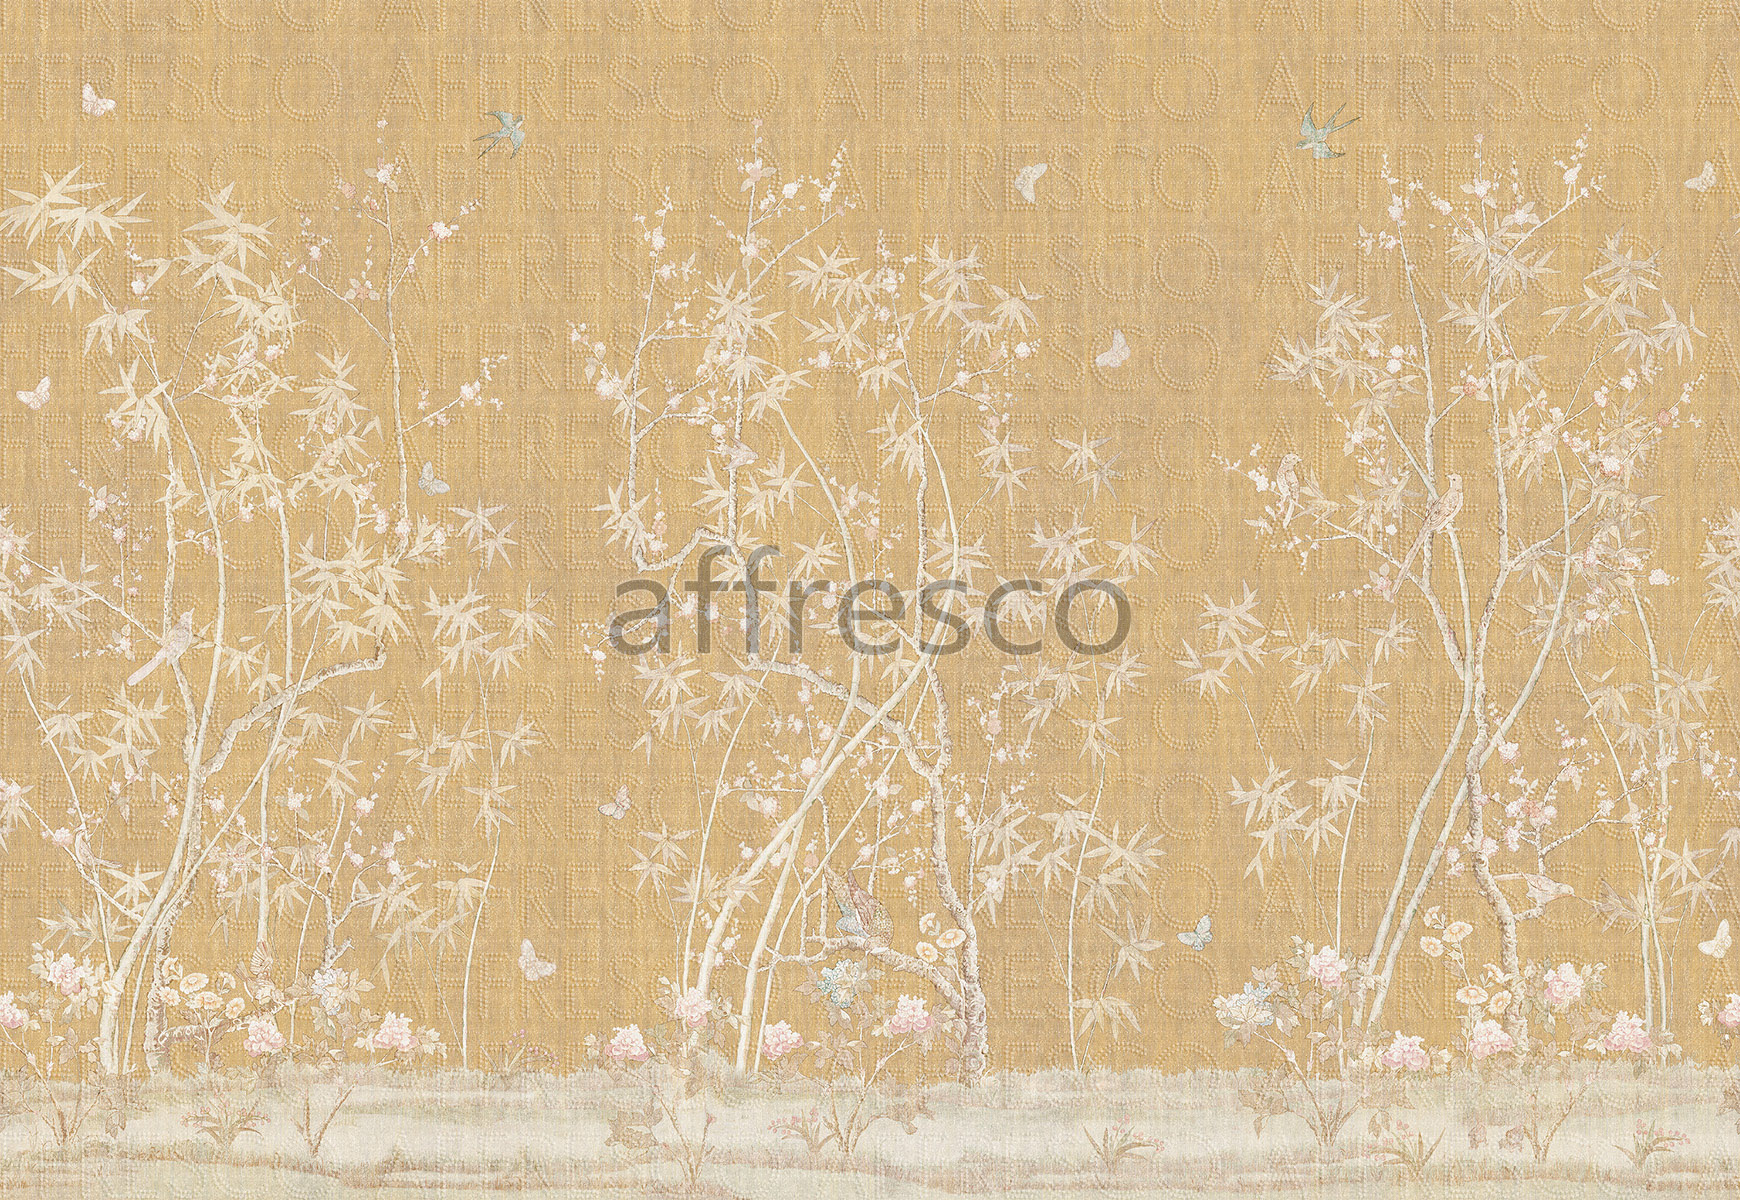 6889 | Gardens | Birds and butterflies on trees | Affresco Factory